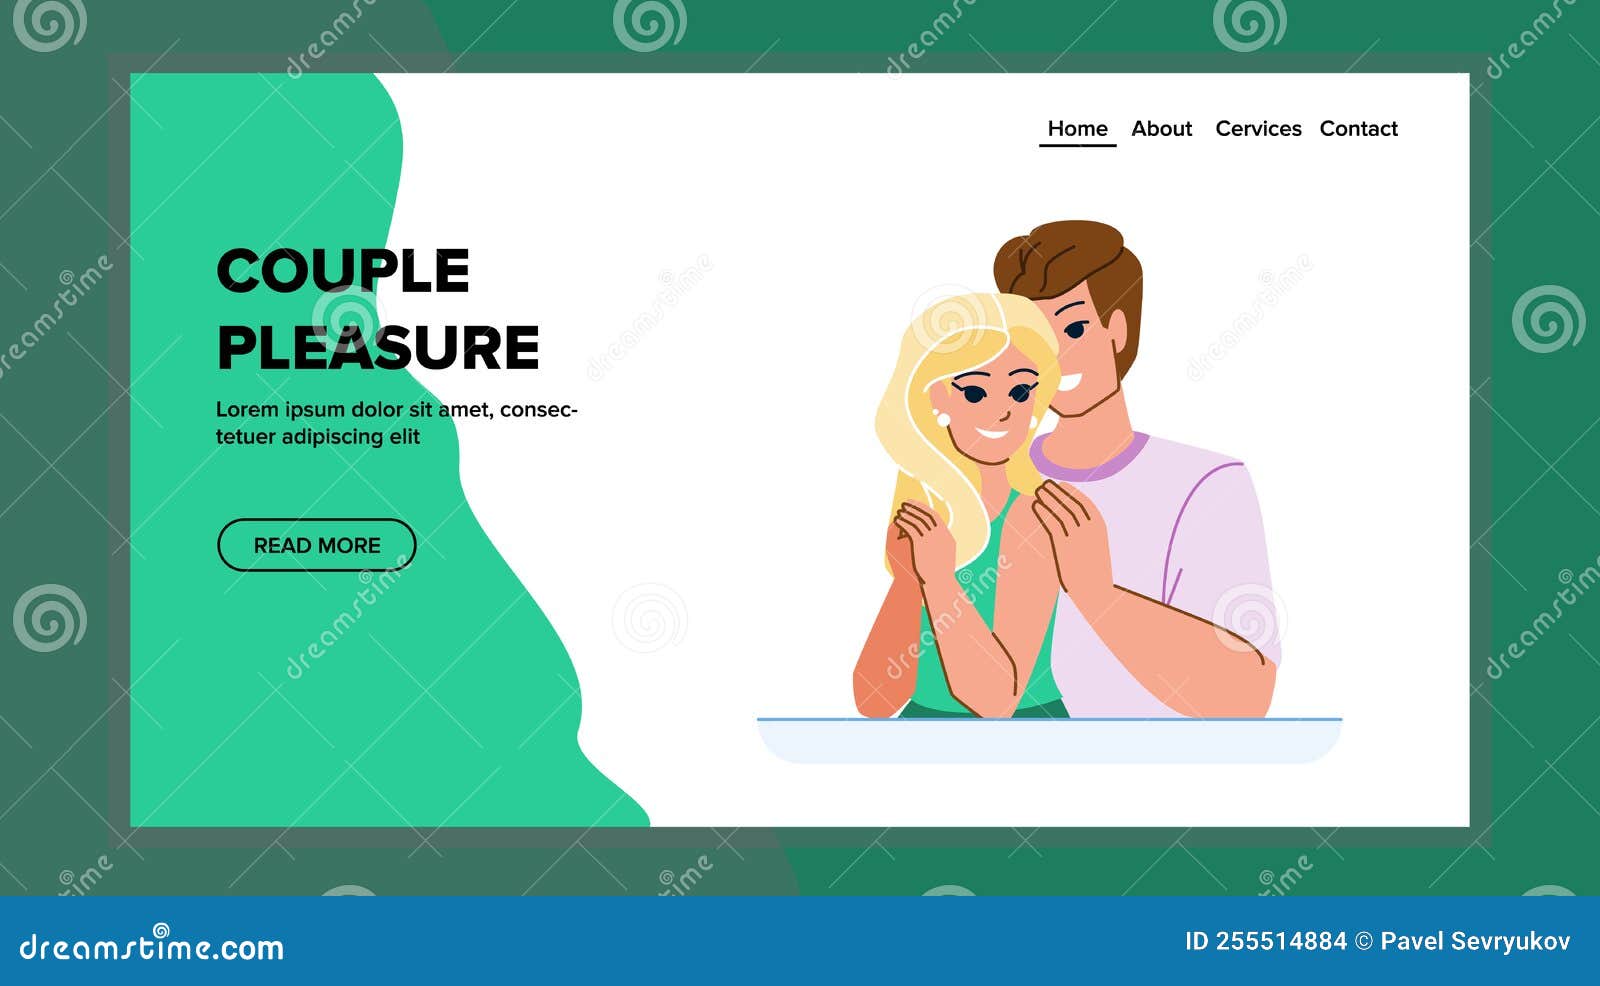 Couple pleasure vector stock illustration